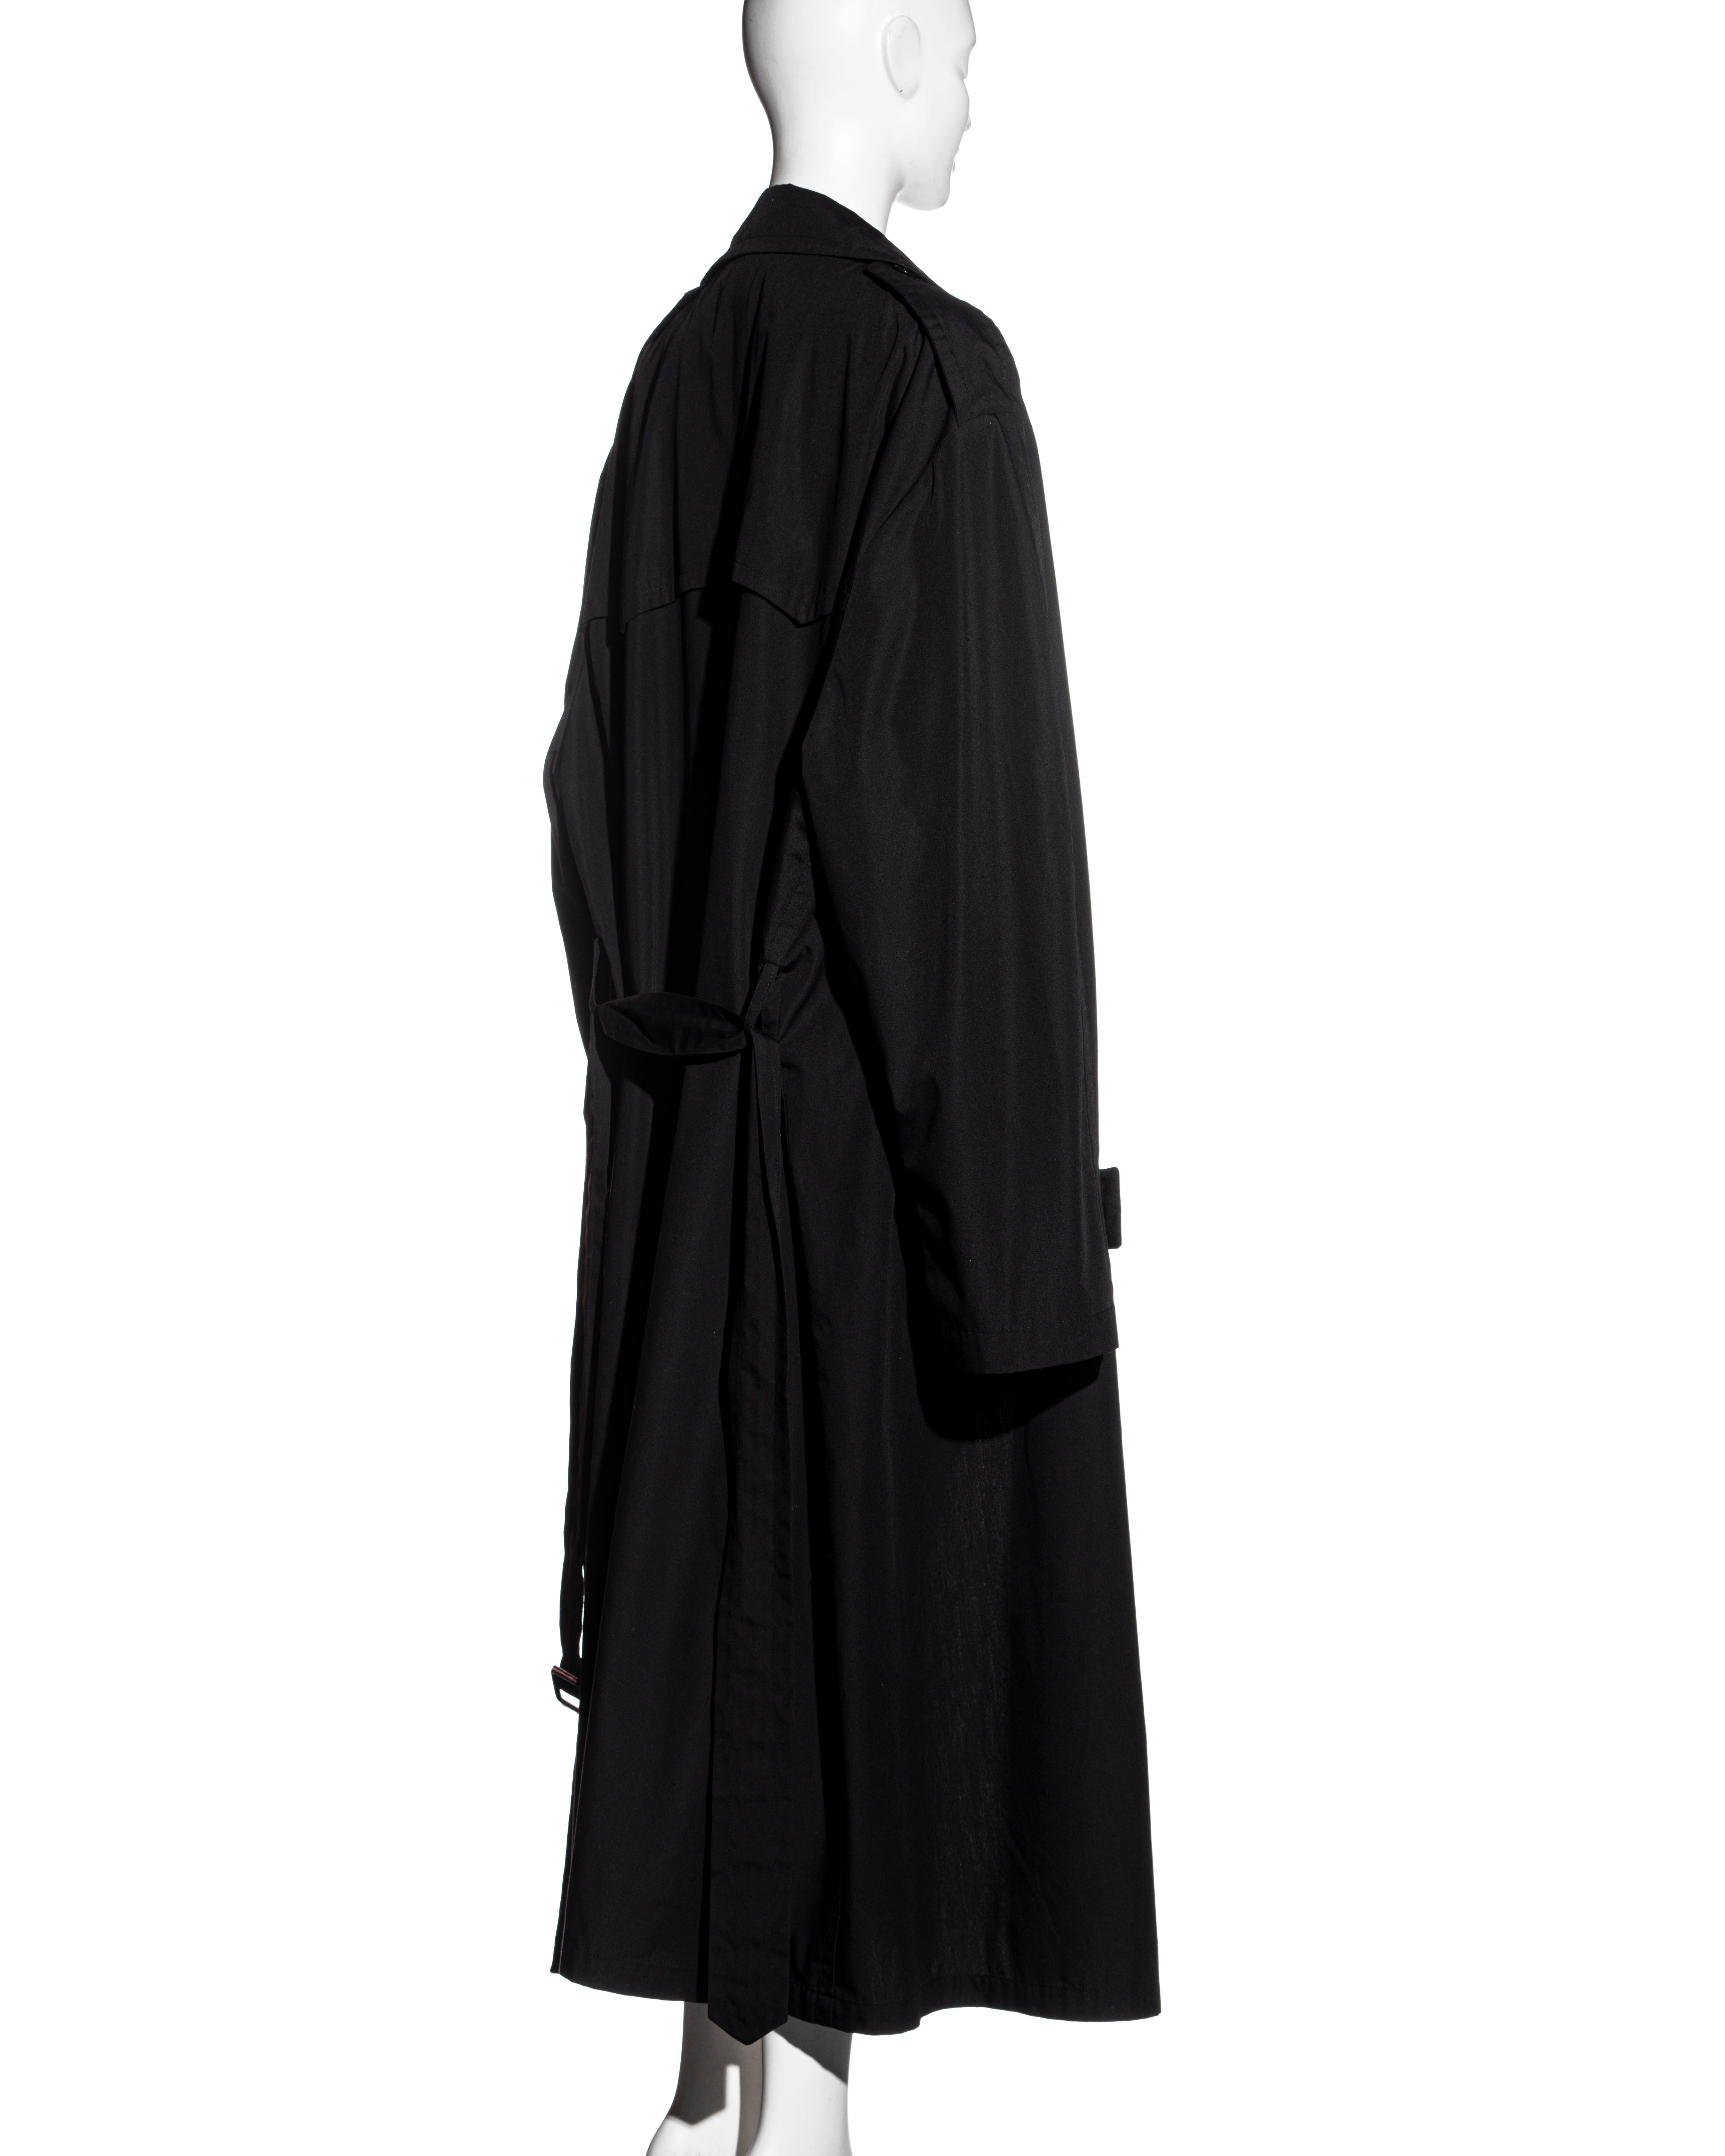 Martin Margiela black oversized size 74 trench coat, ss 2000 For Sale 3